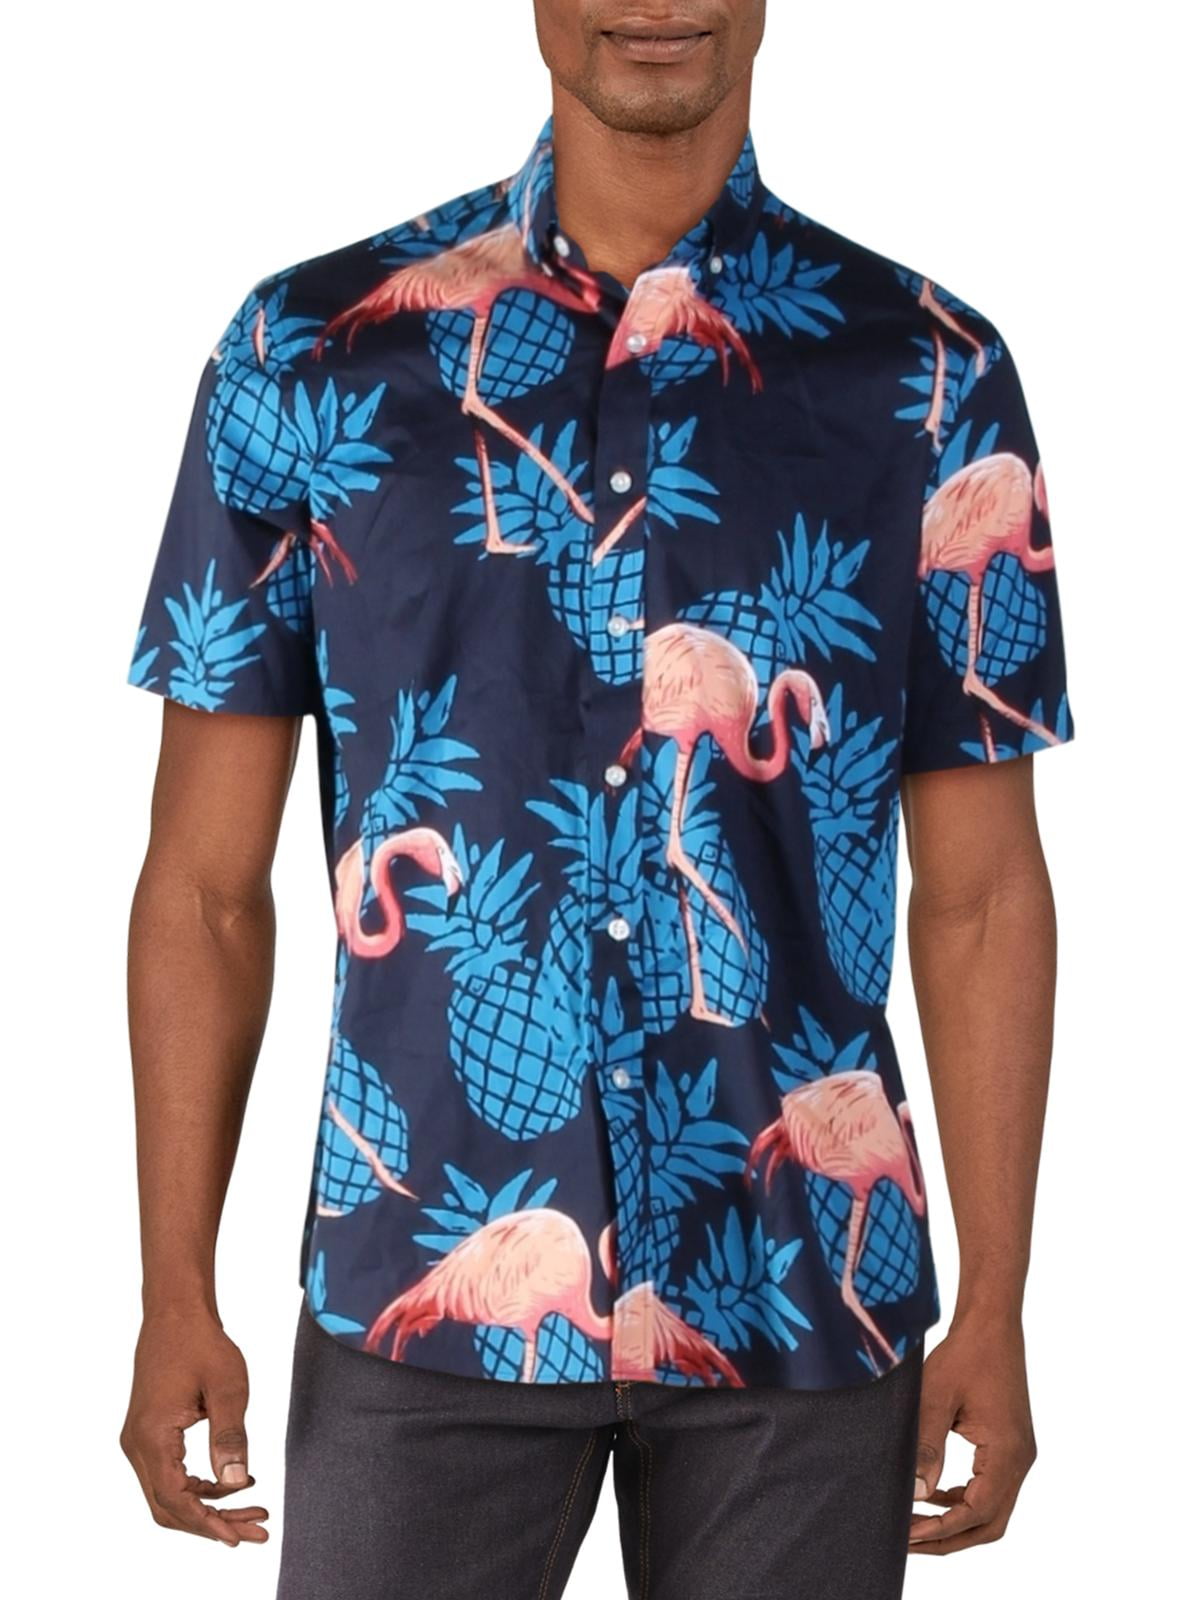 Pineapples and Flamingos Mens Short Sleeve Polo Shirt Regular Blouse Sport Tee